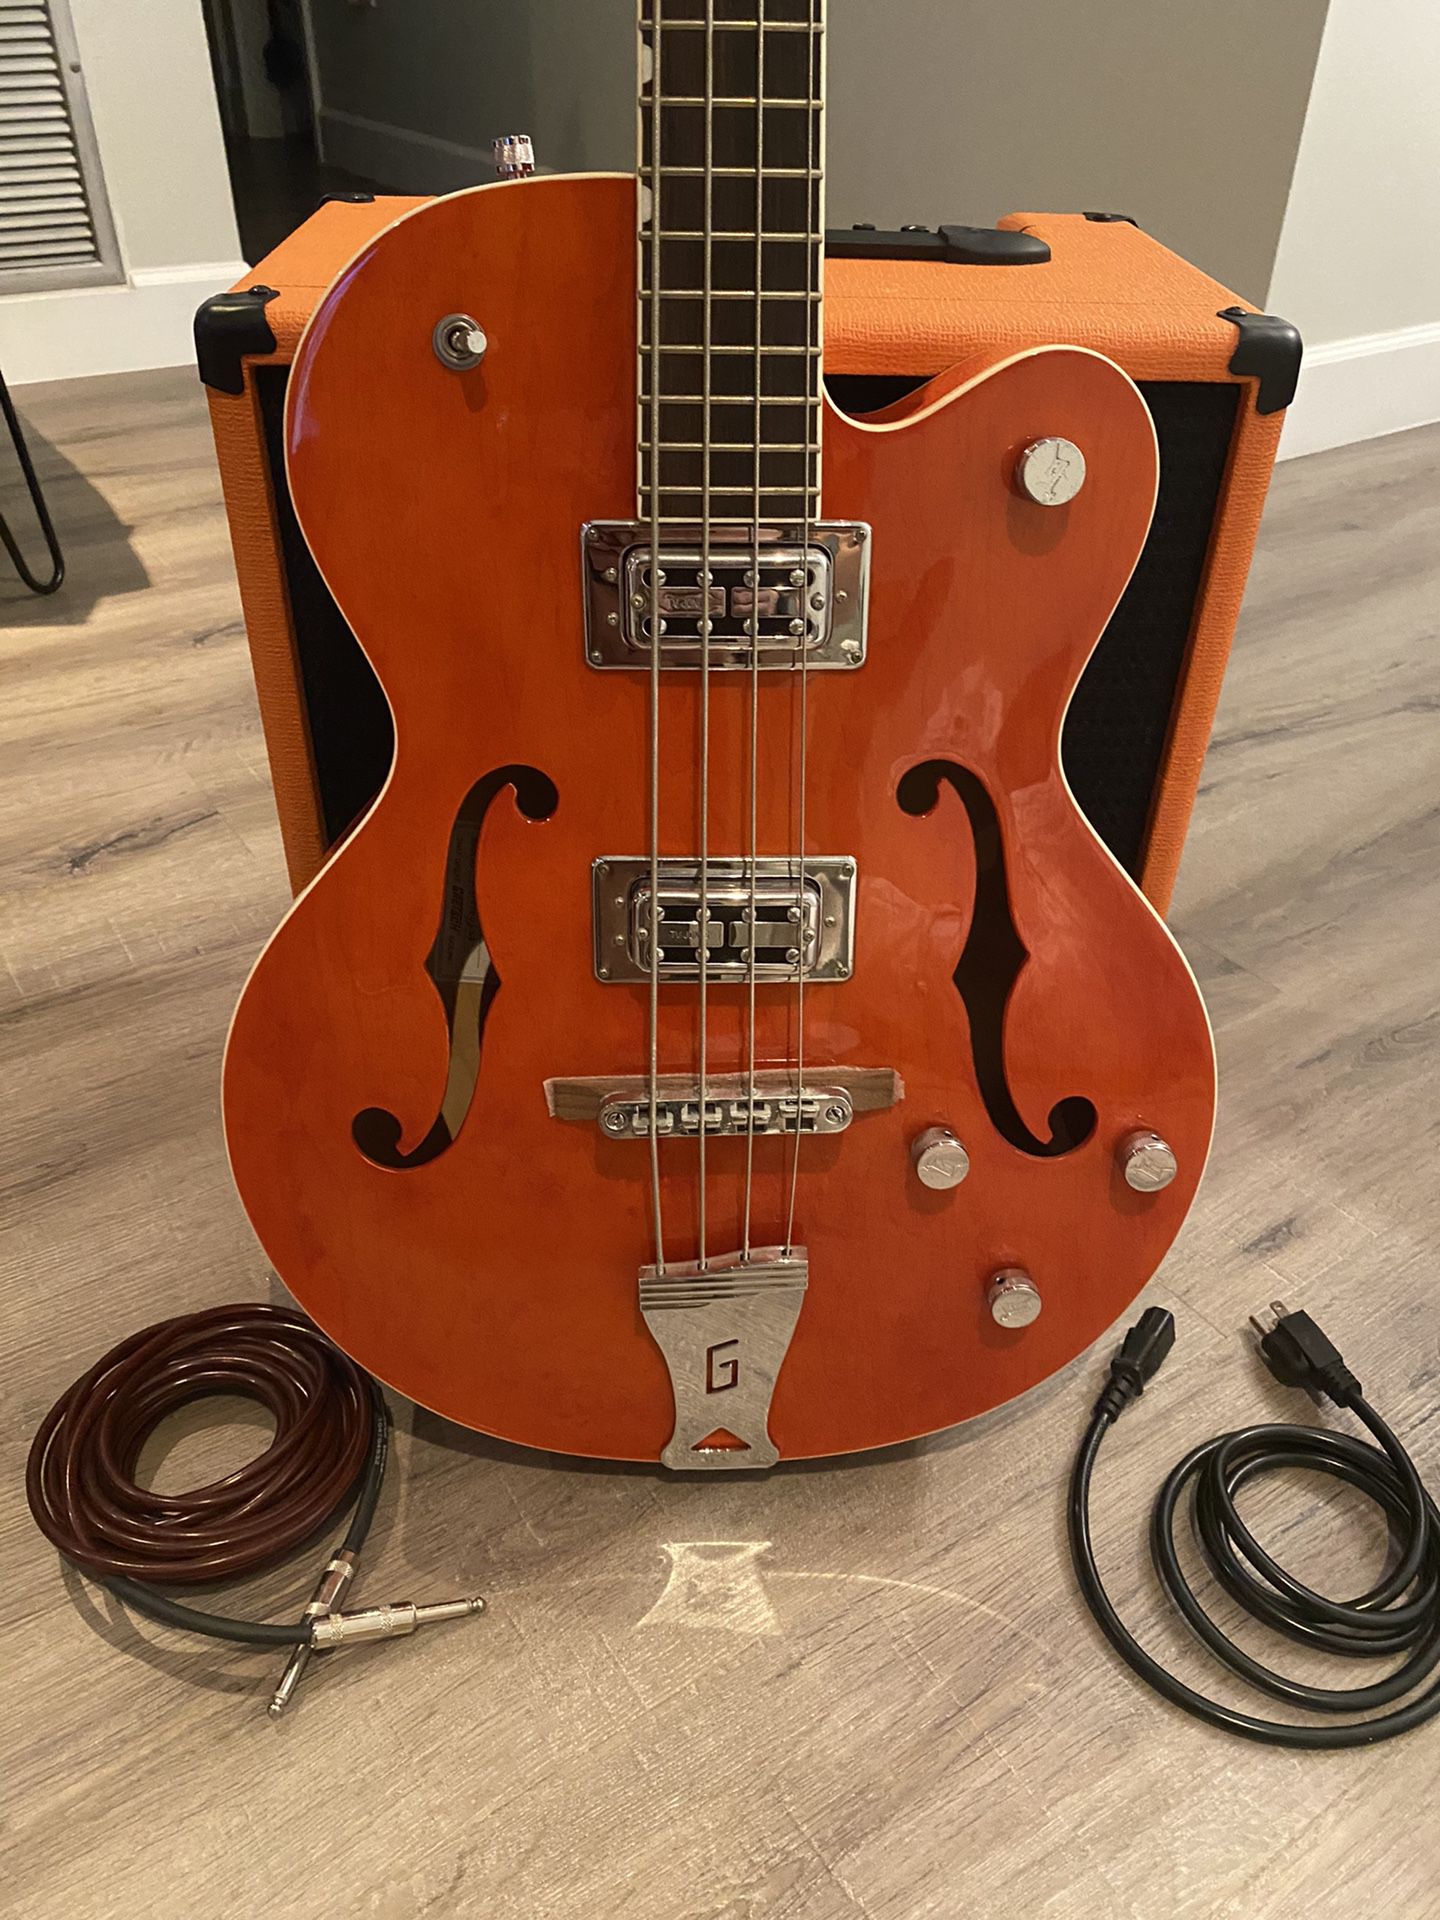 Gretsch Electromatic Bass Guitar and Orange bass amp.